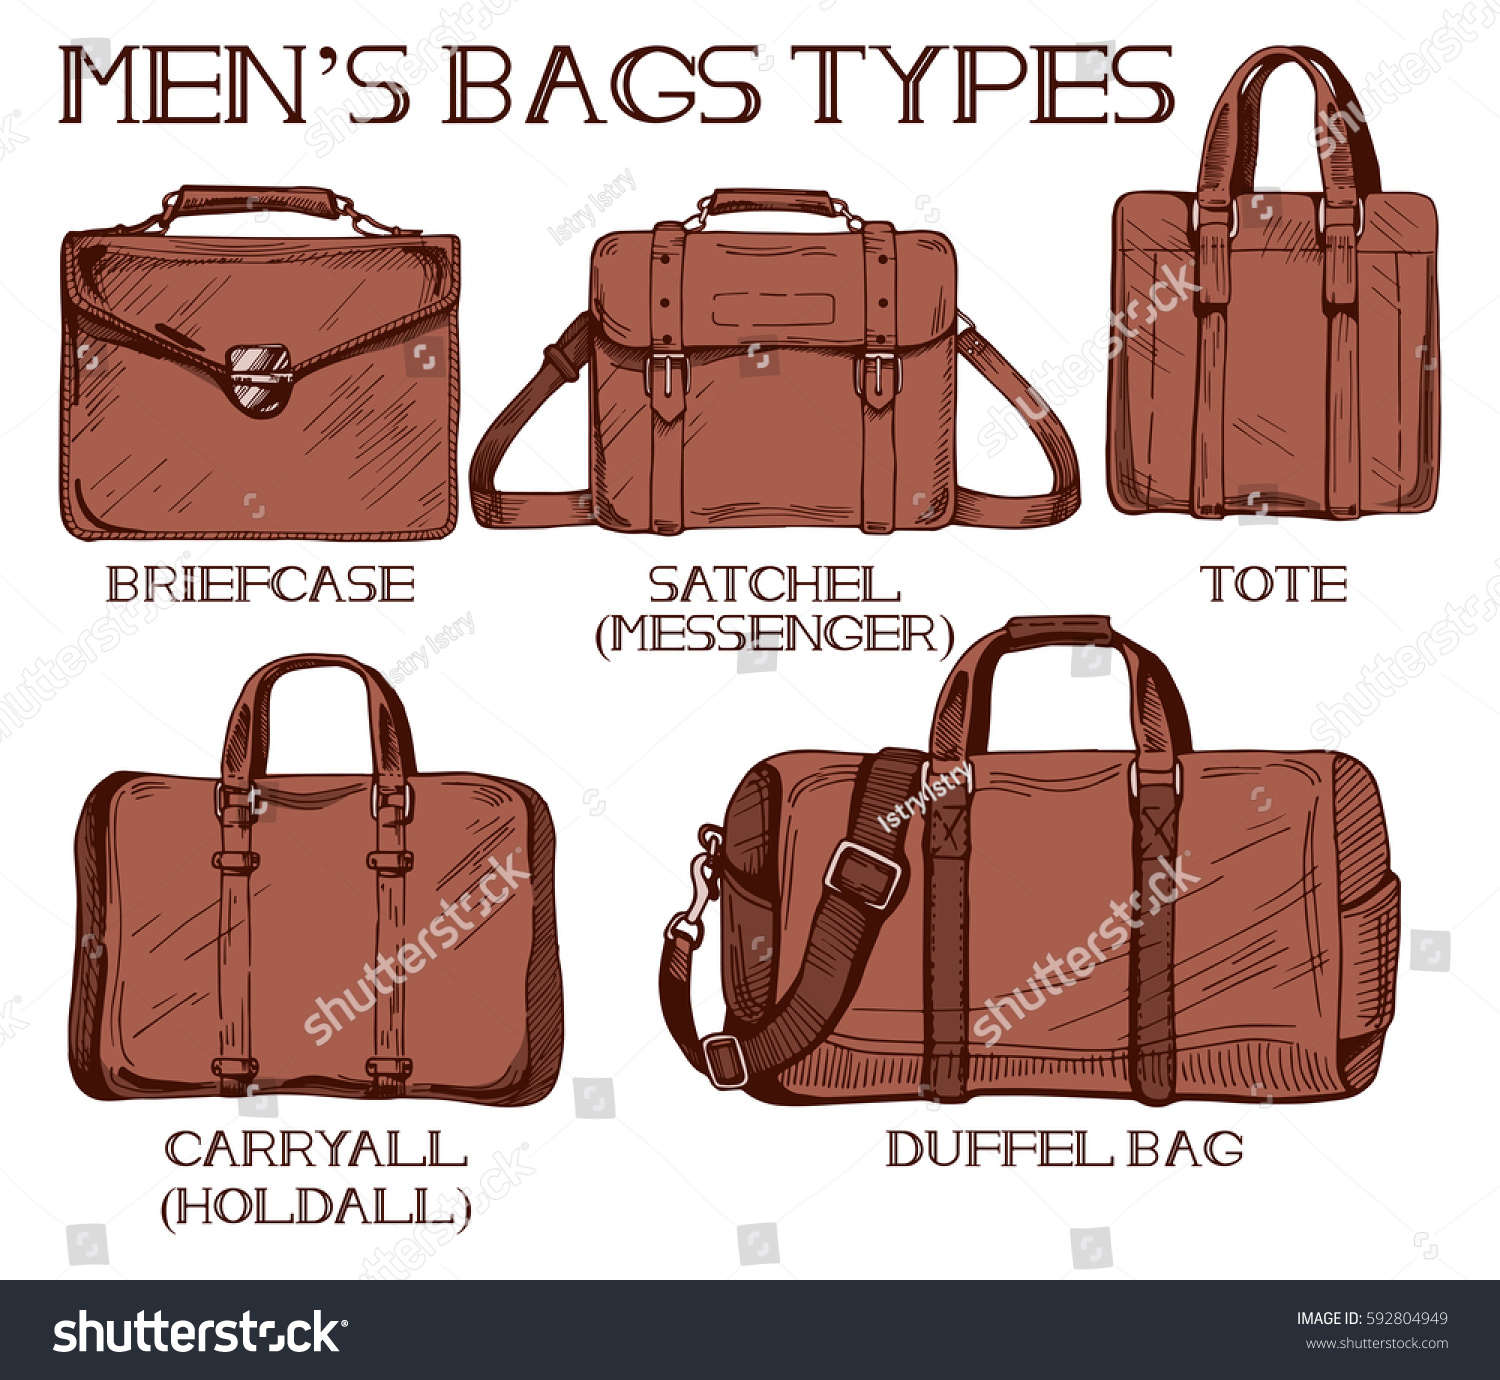 Мужская сумка название. Типы мужских сумок. Сумка мужская рисунок. Вид сумки тоут.